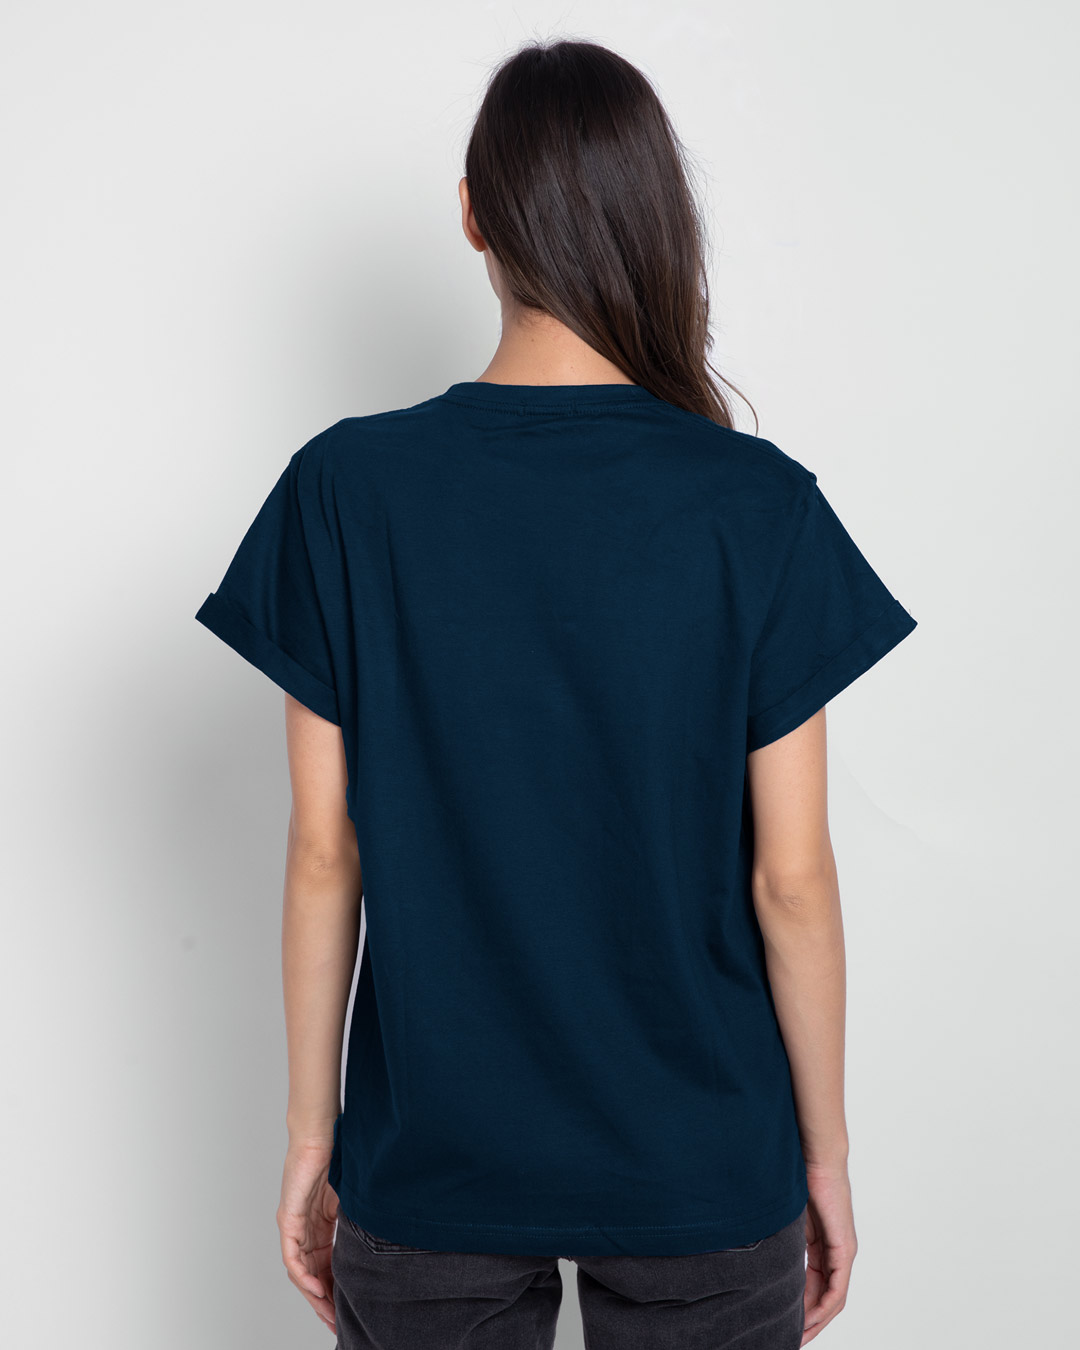 Shop Mickey Pop Block Boyfriend T-Shirt (DL) Navy Blue-Back